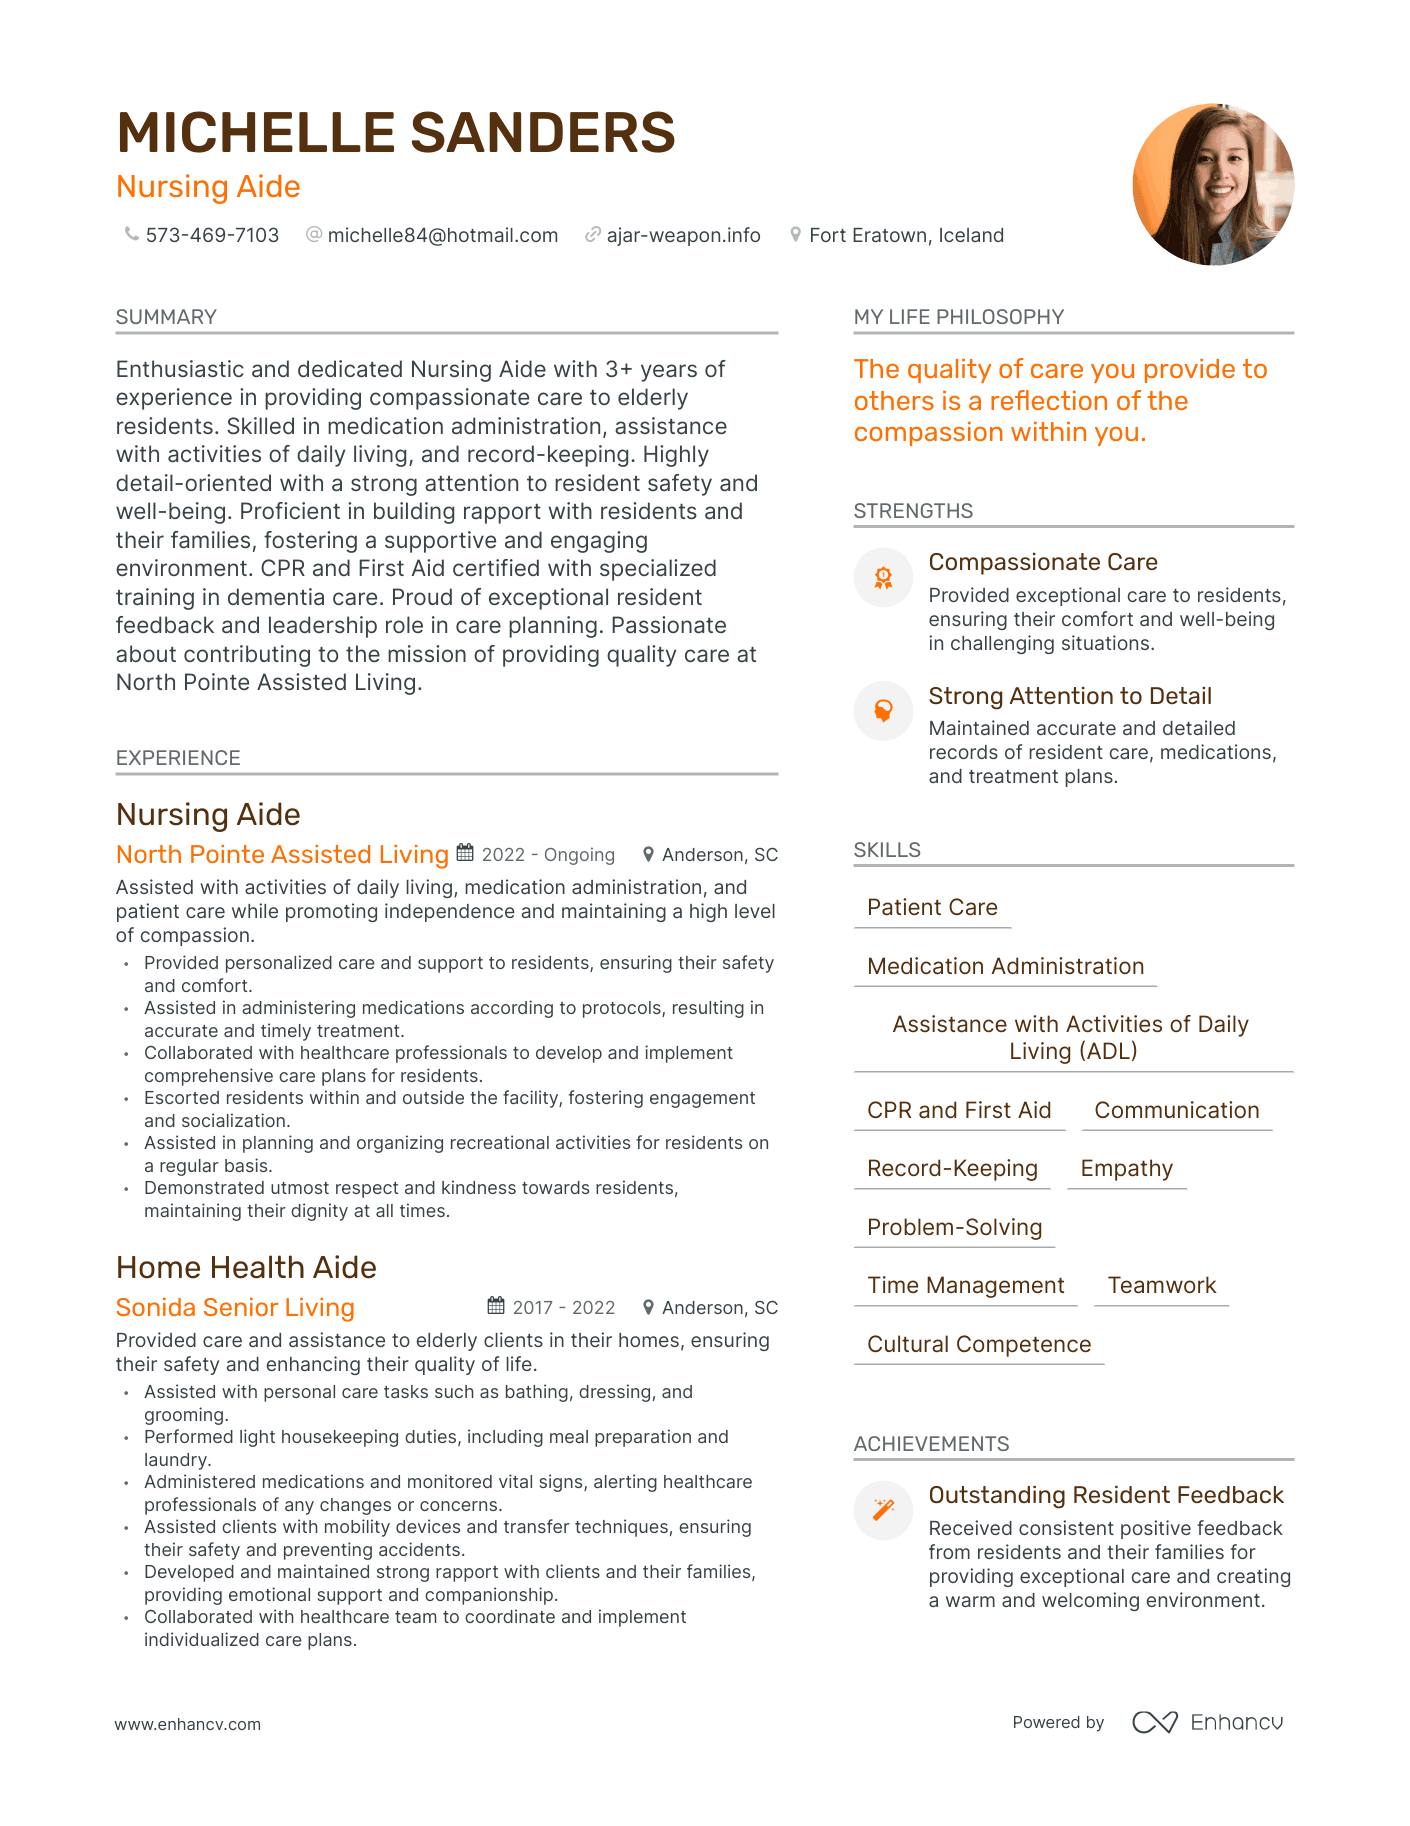 Nursing Aide resume example